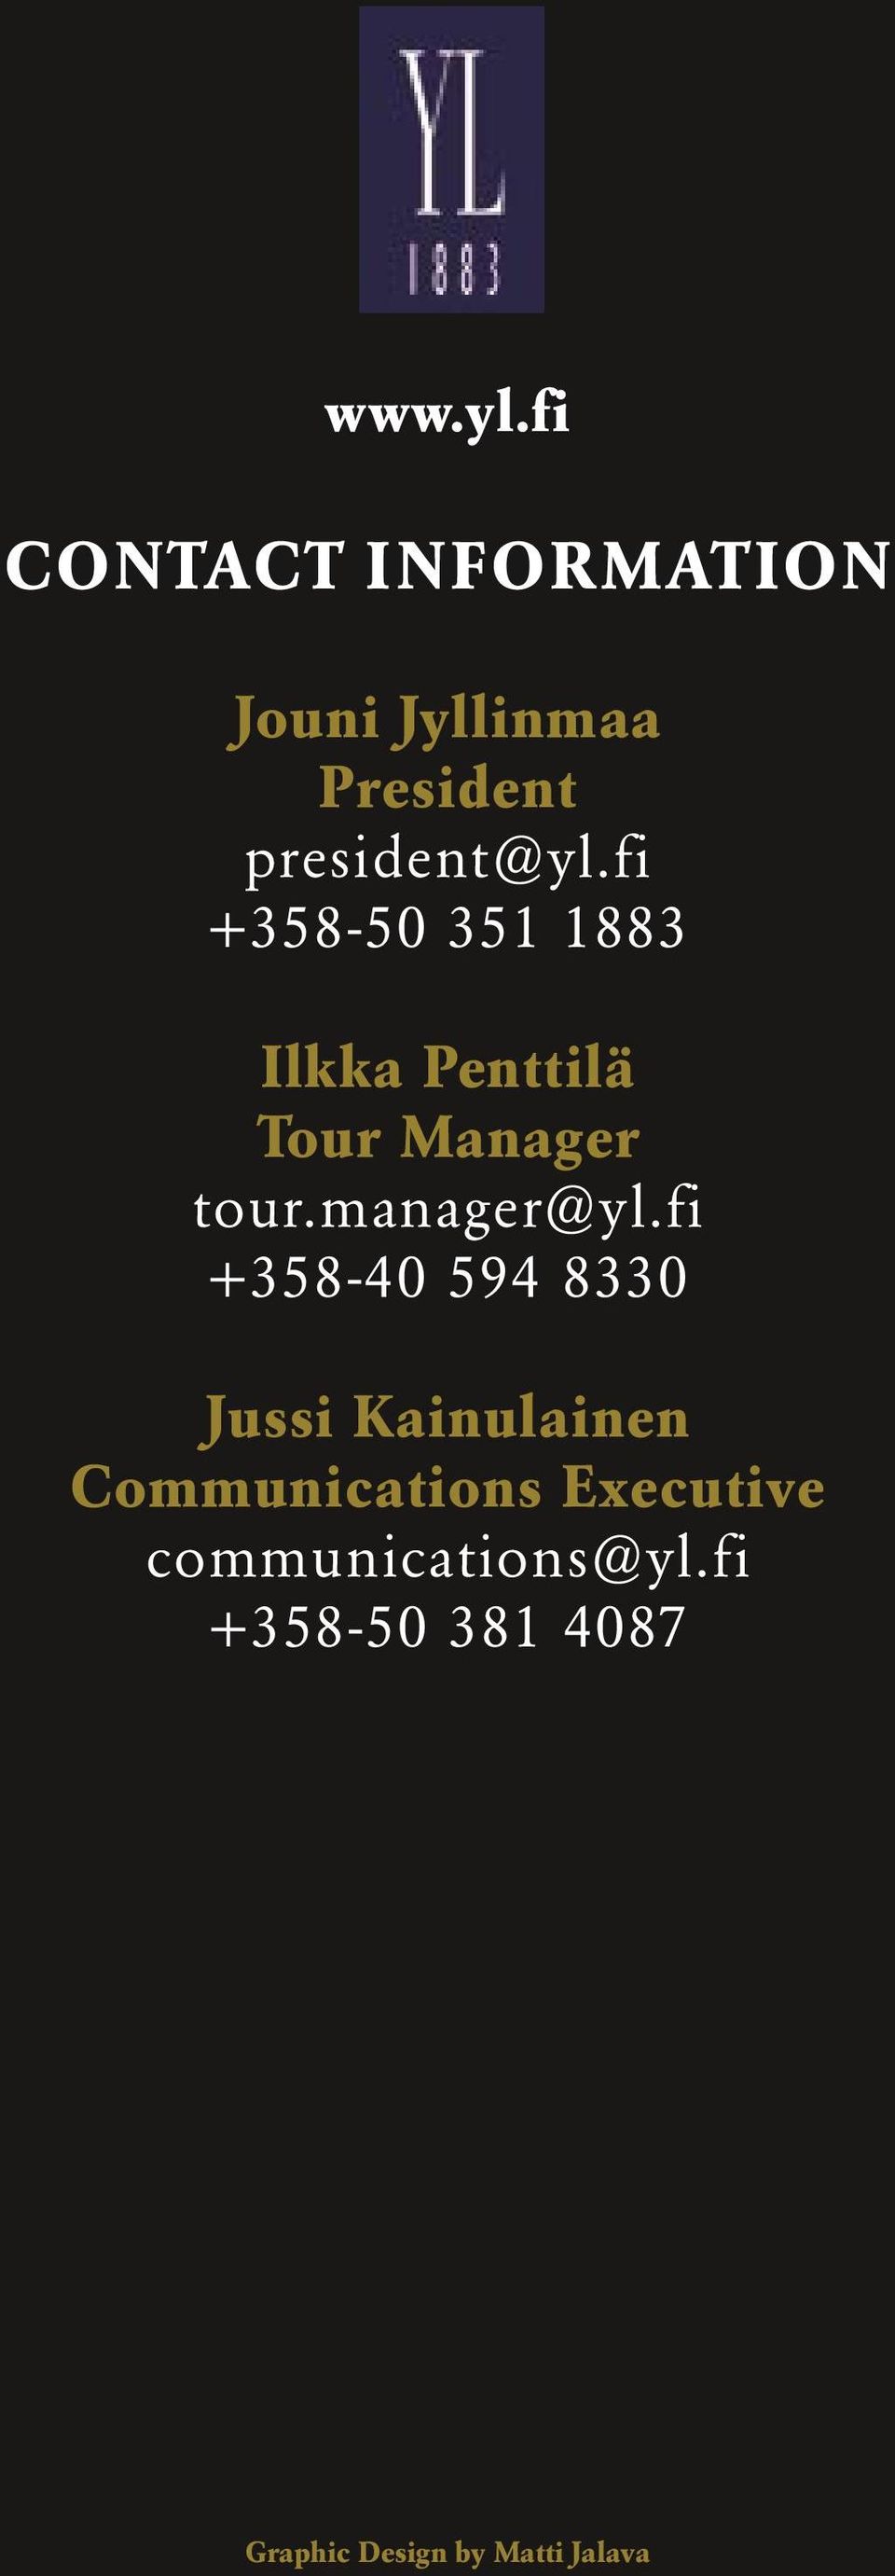 fi +358-40 594 8330 Jussi Kainulainen Communications Executive